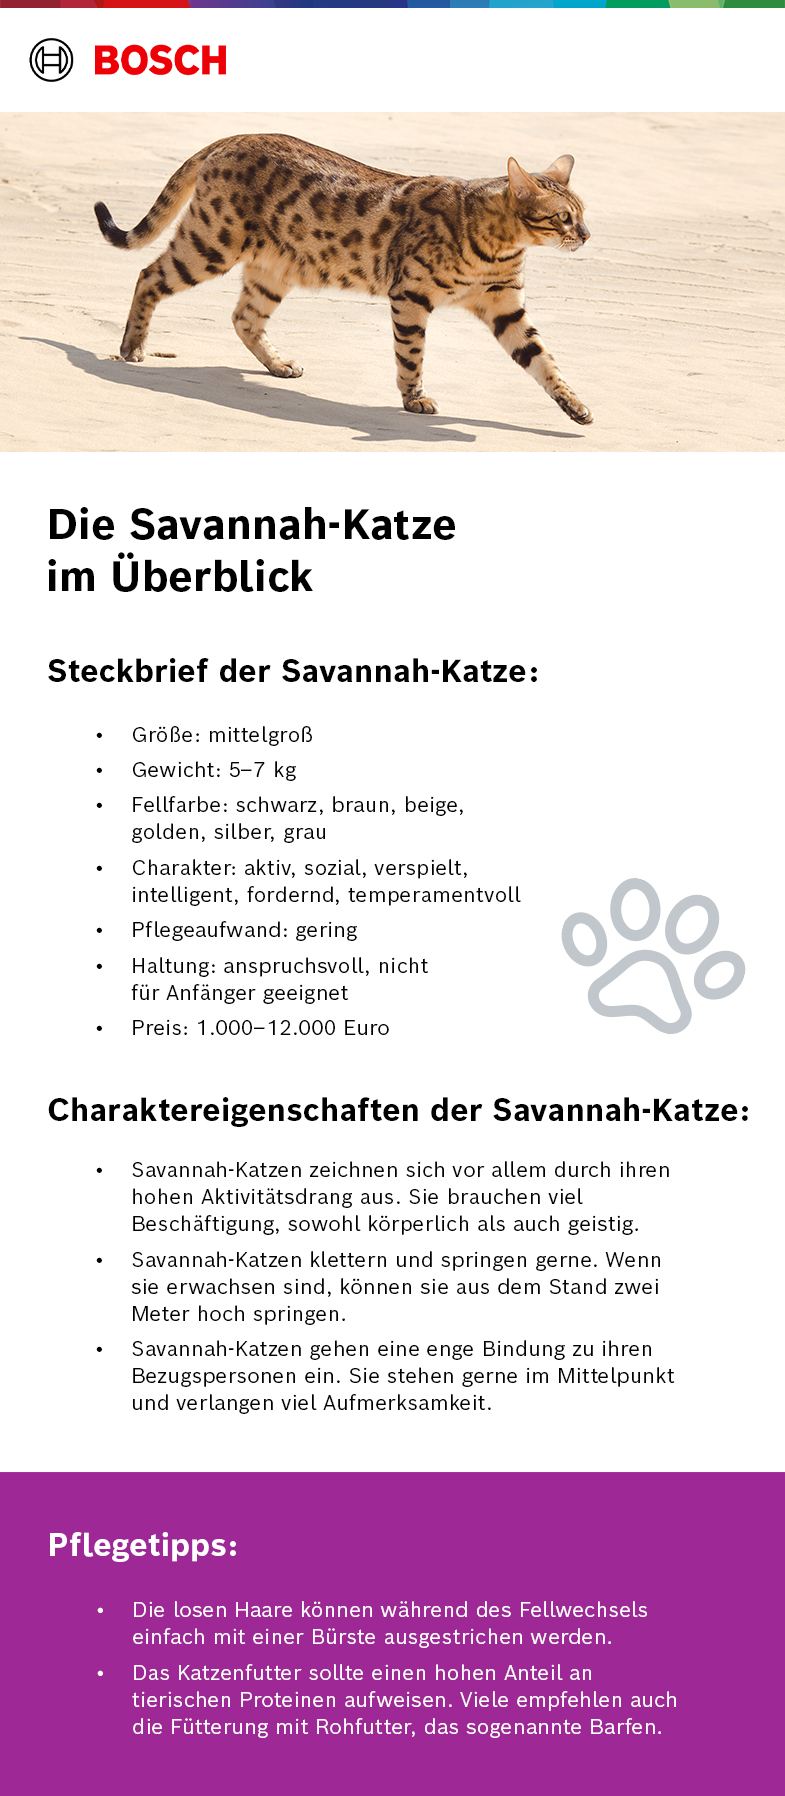 Info-Grafik Savannah-Katze